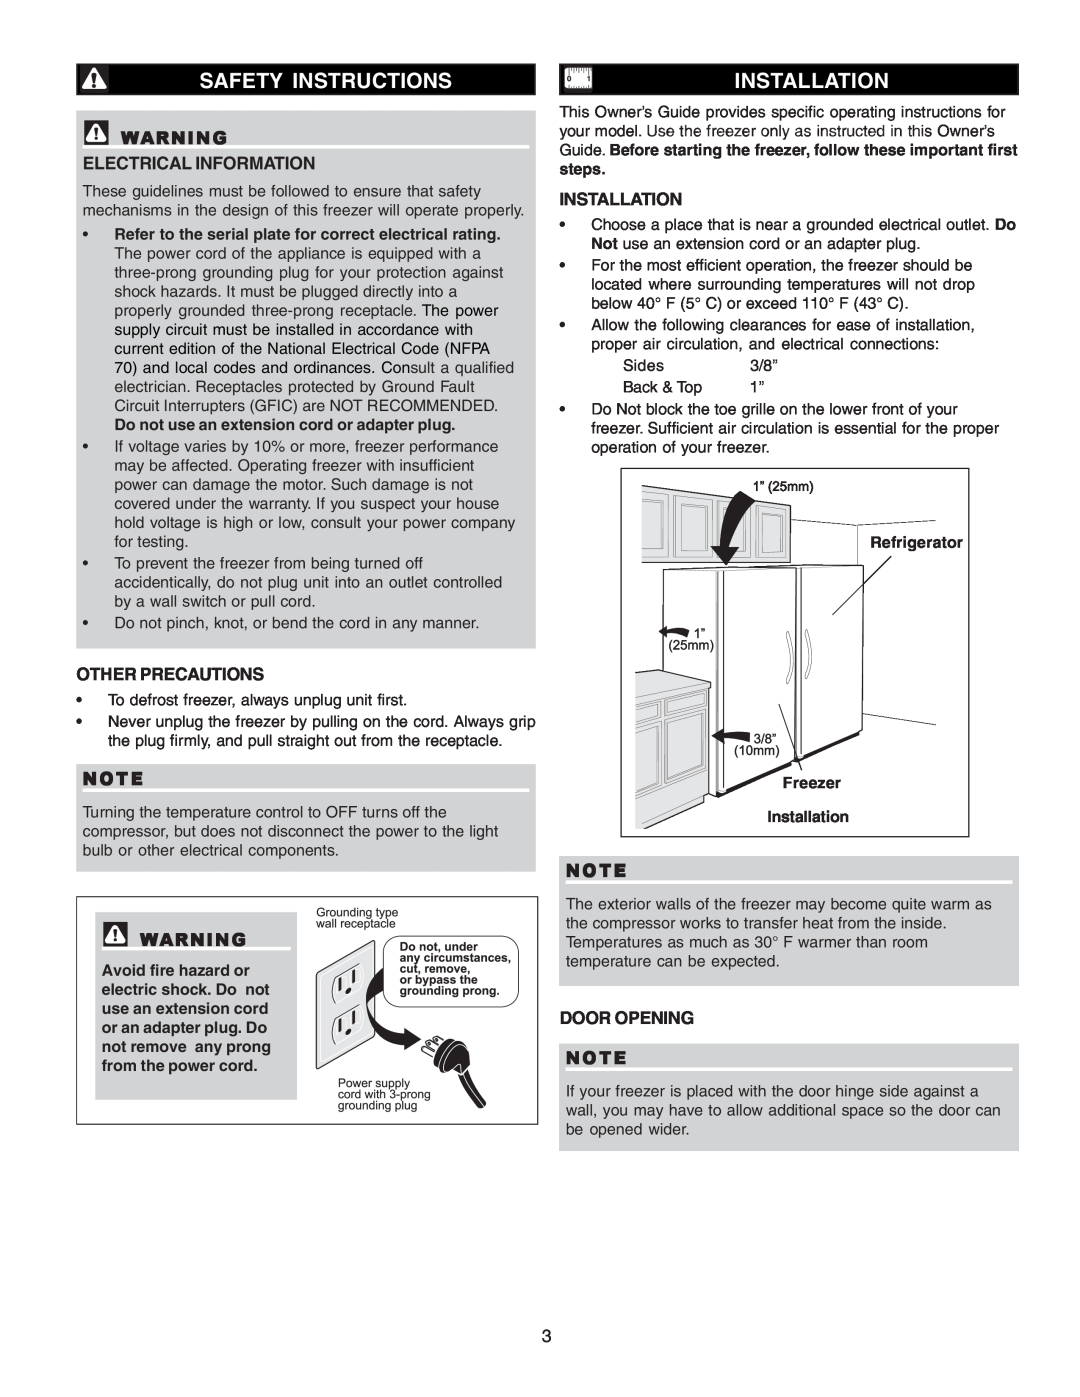 Sears Freezer Single-Door Safety Instructions, Installation, Electrical Information, Other Precautions, Door Opening 